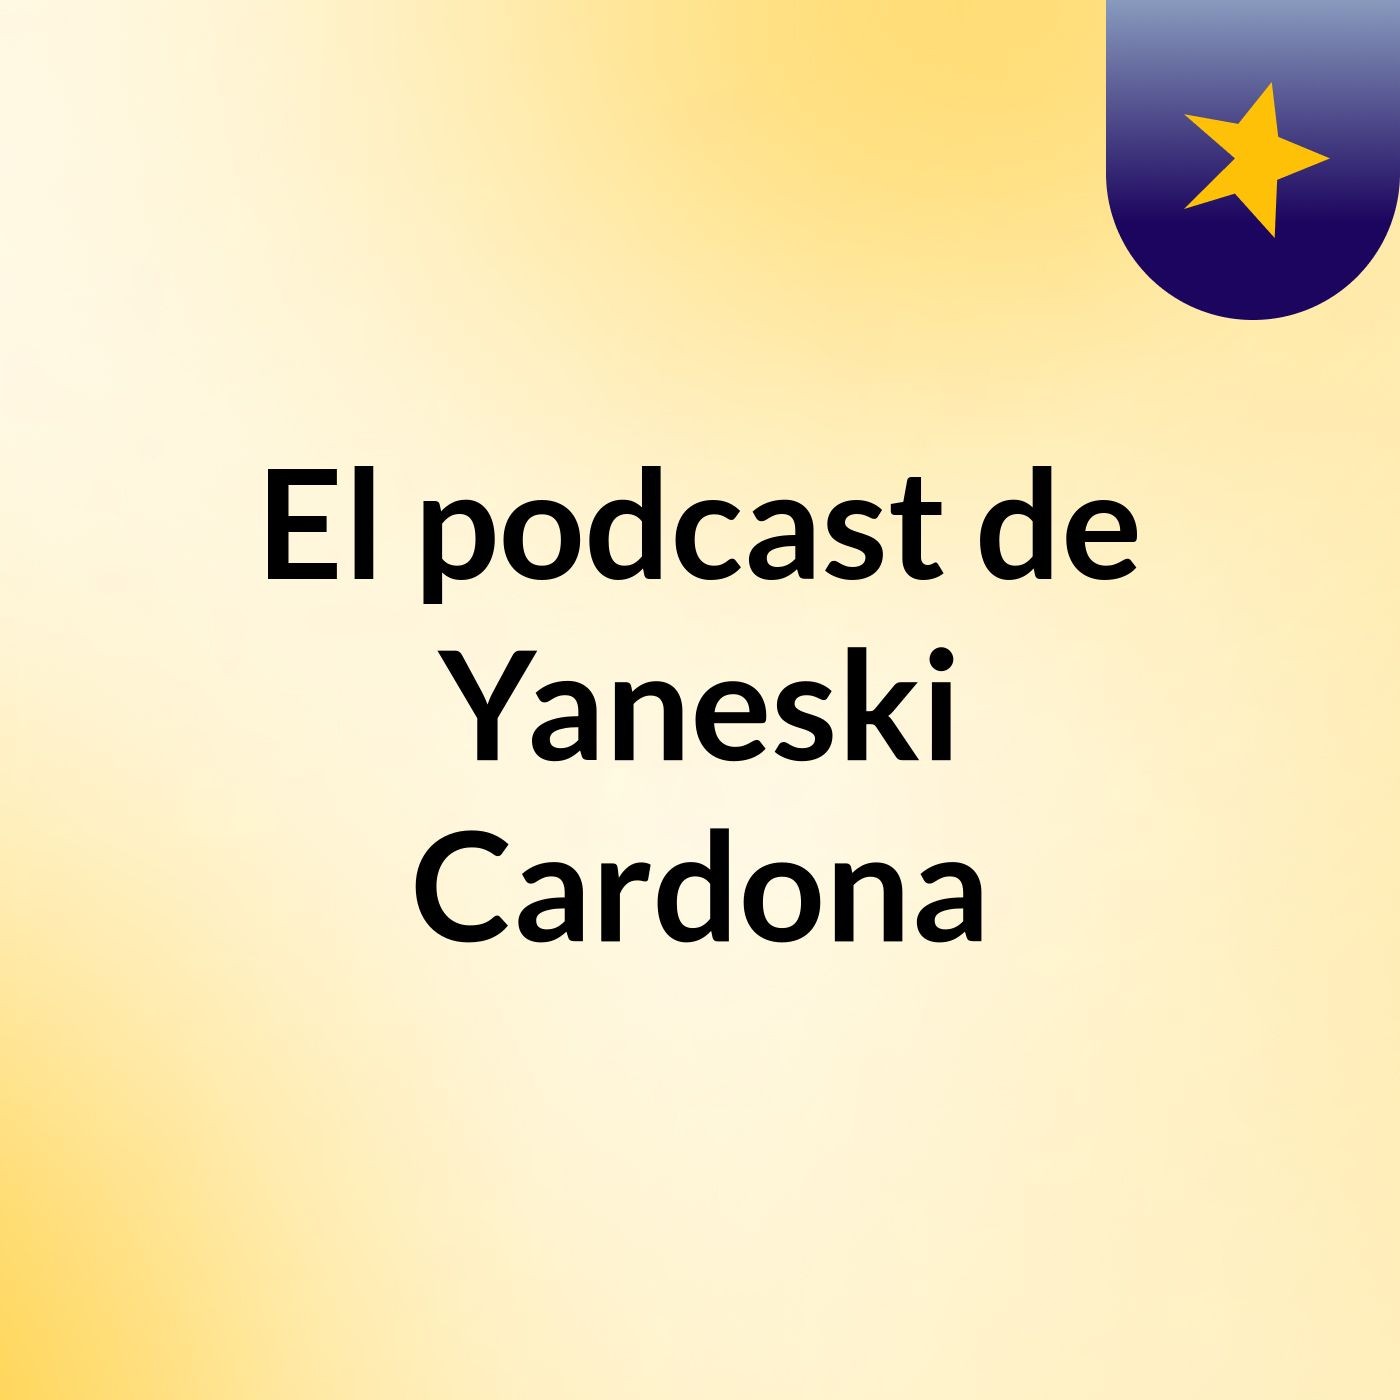 El podcast de Yaneski Cardona